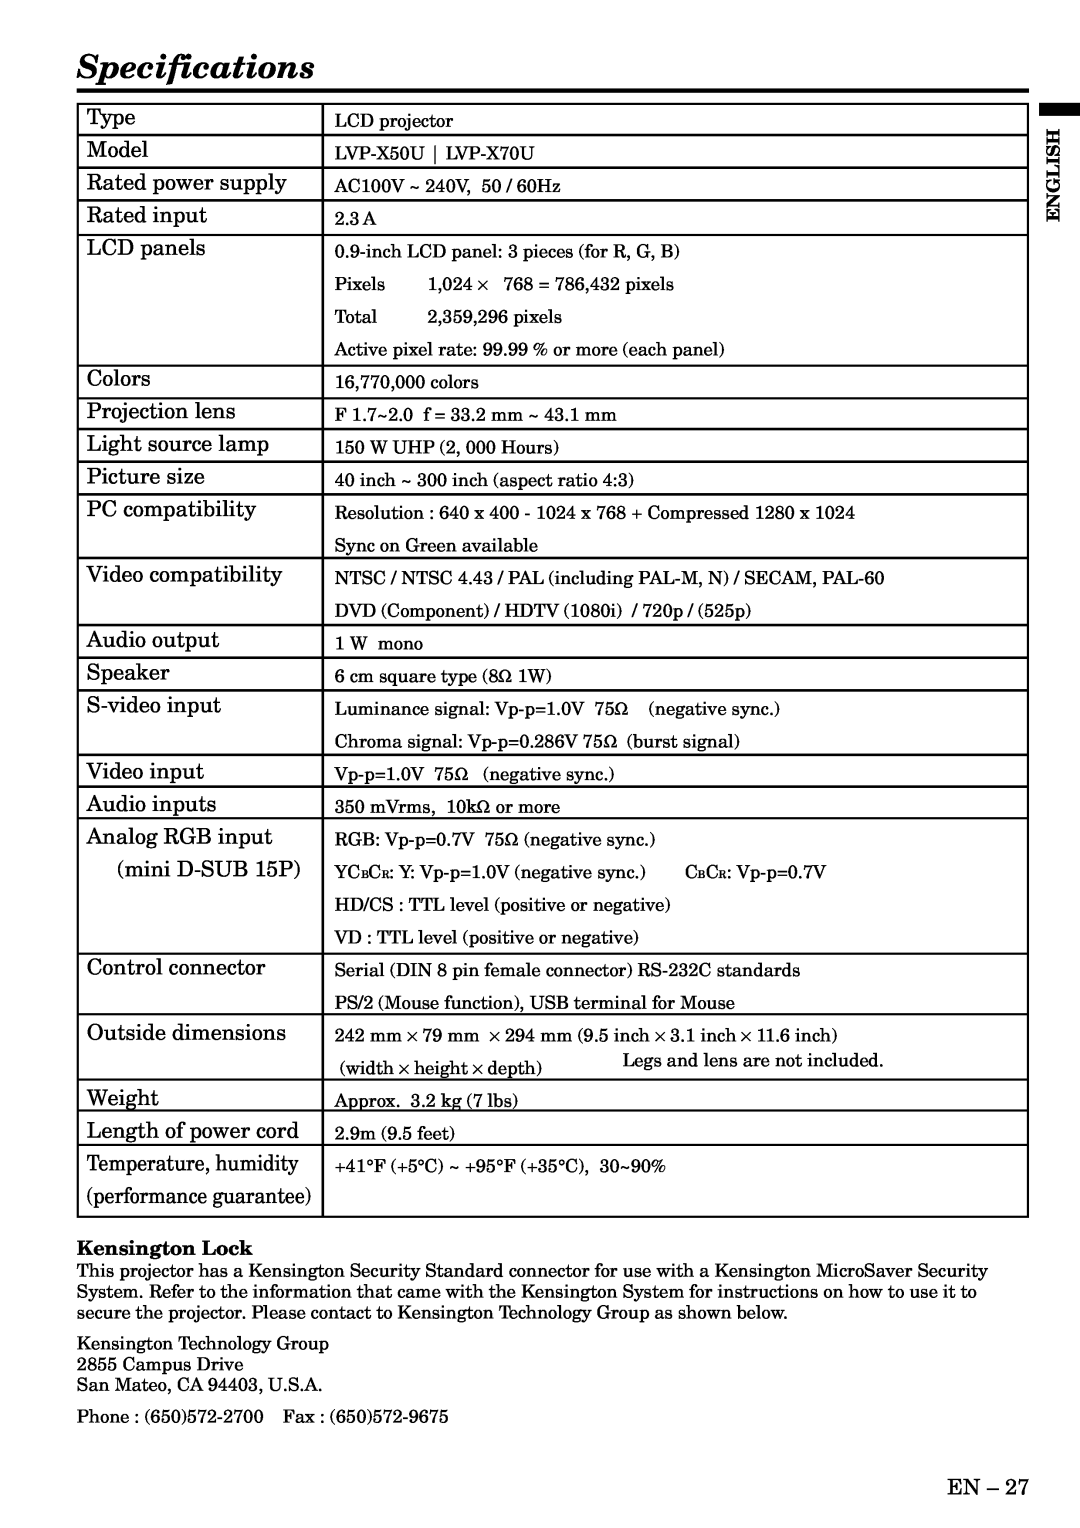 Mitsubishi Electronics X70, X50 user manual Specifications, Kensington Lock 